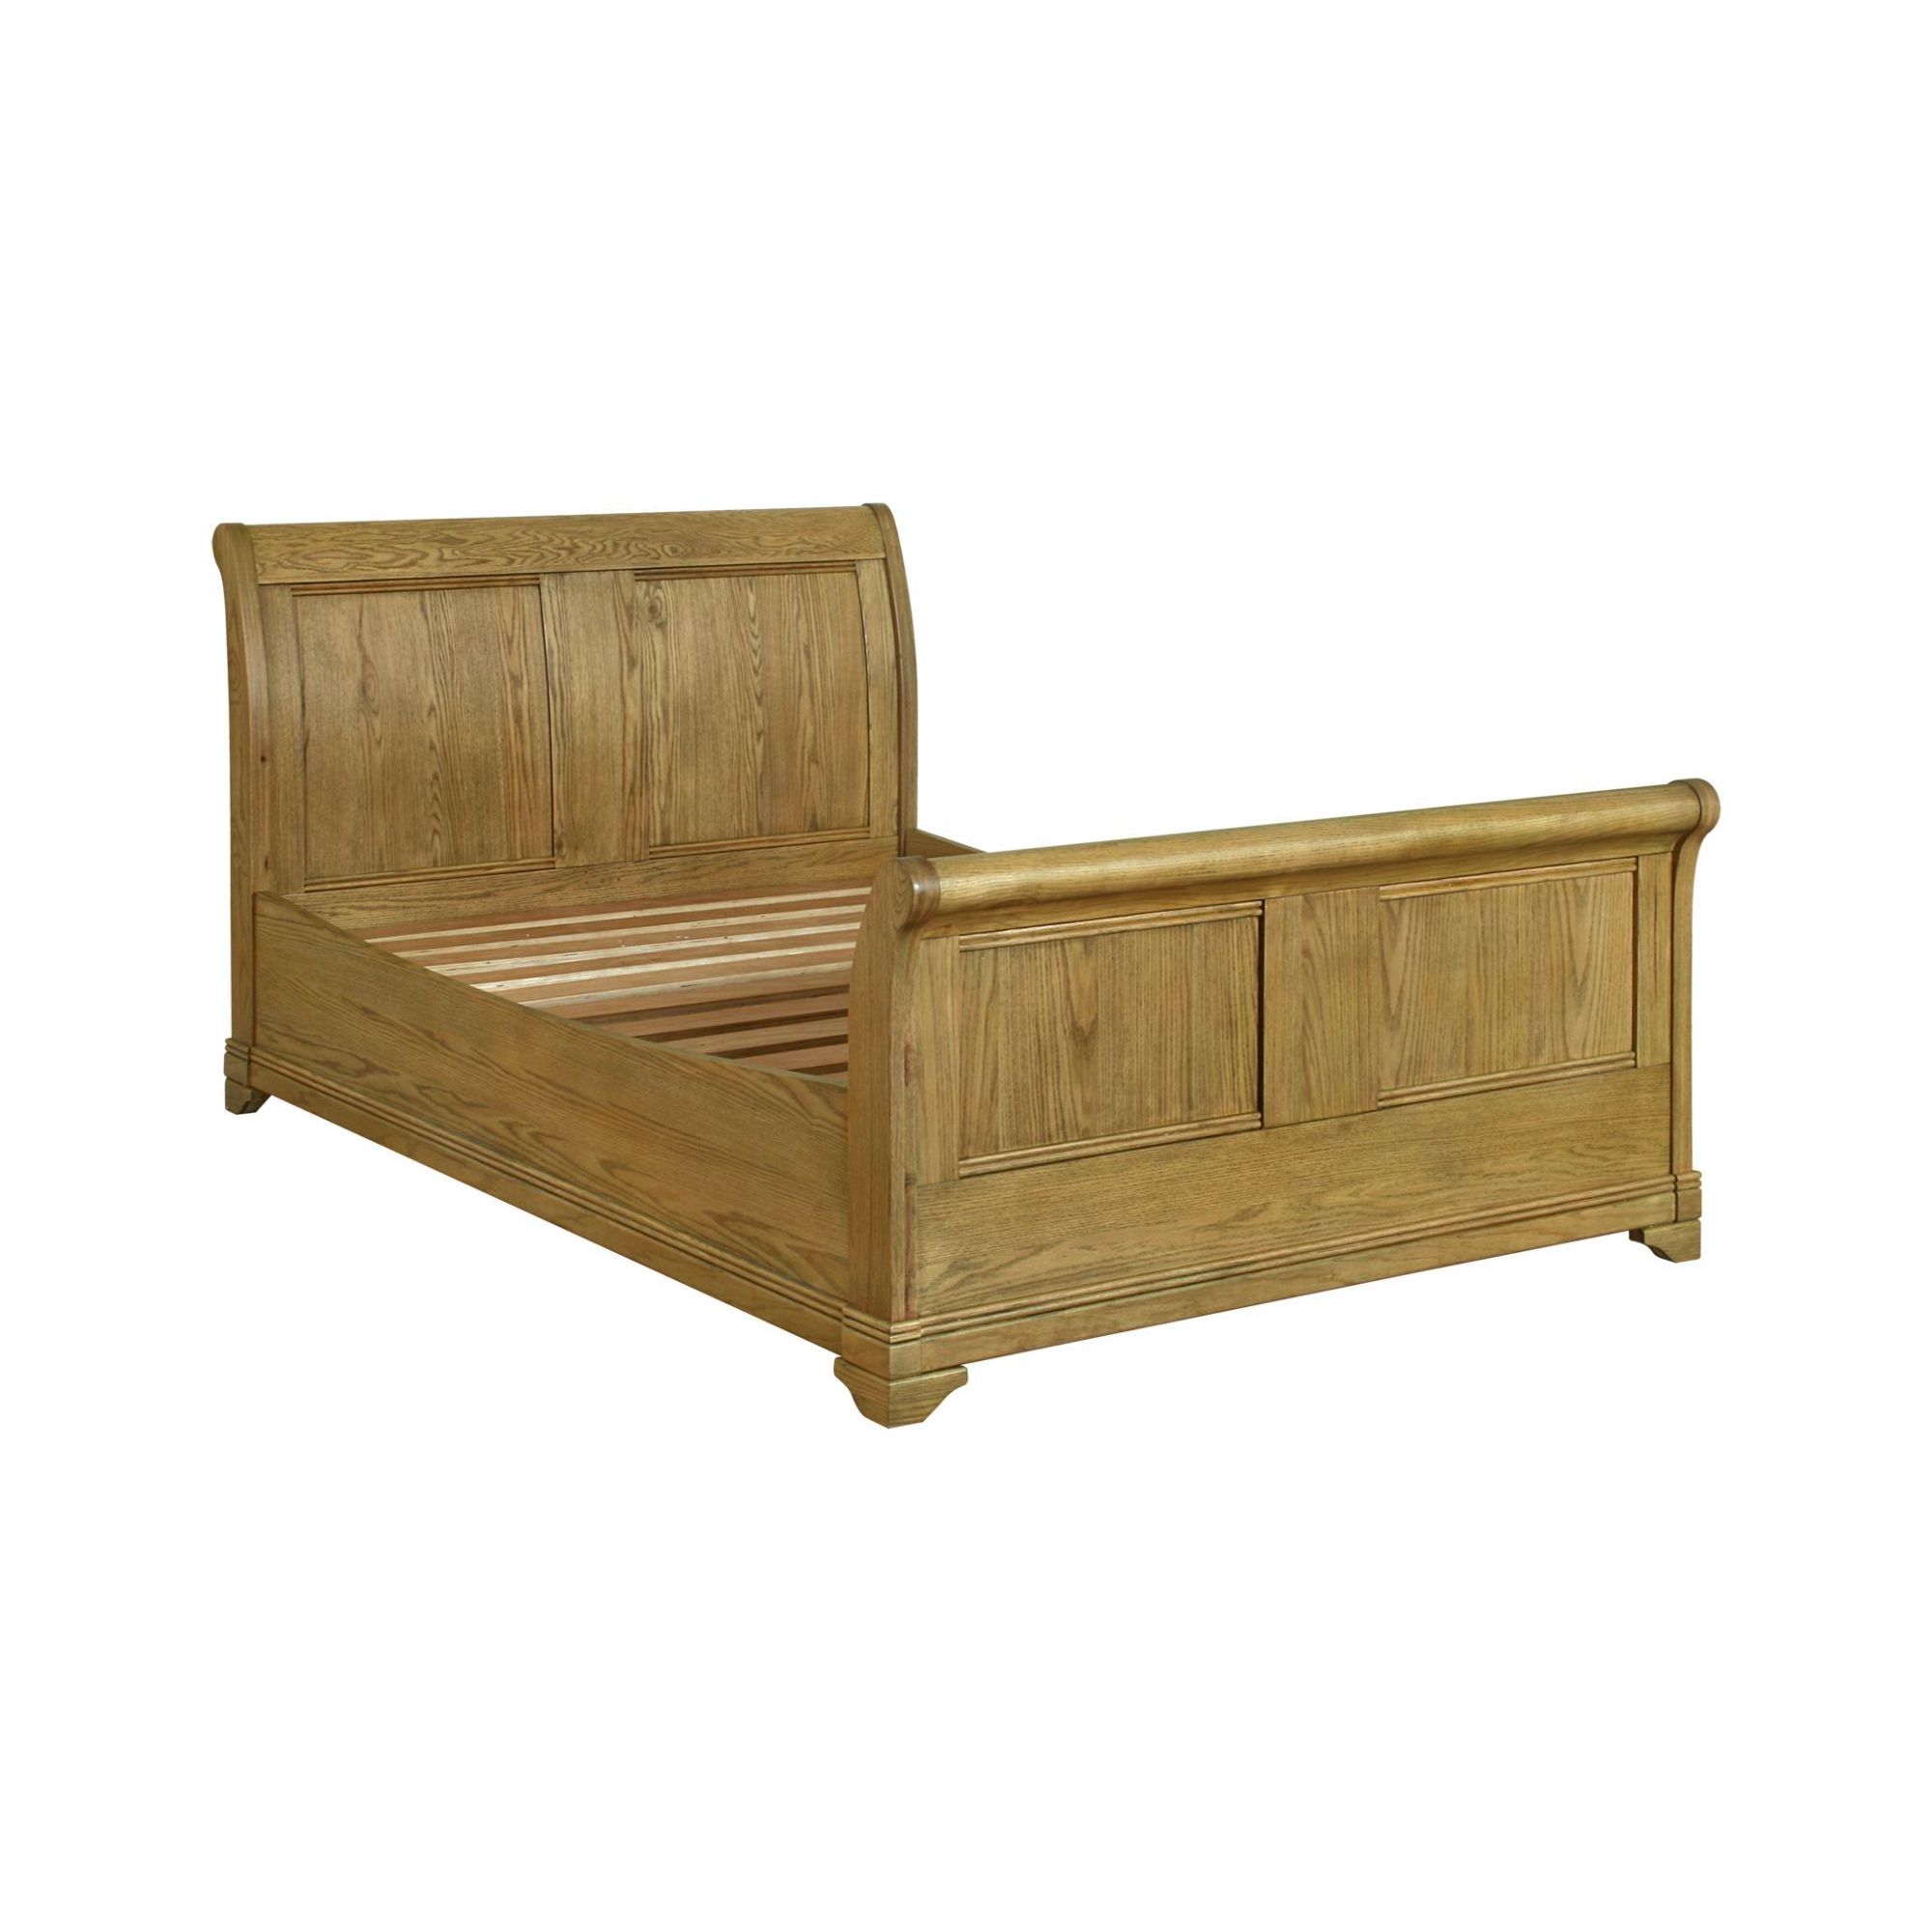 Kelburn Furniture Loire Sleigh Bed - King at Tesco Direct